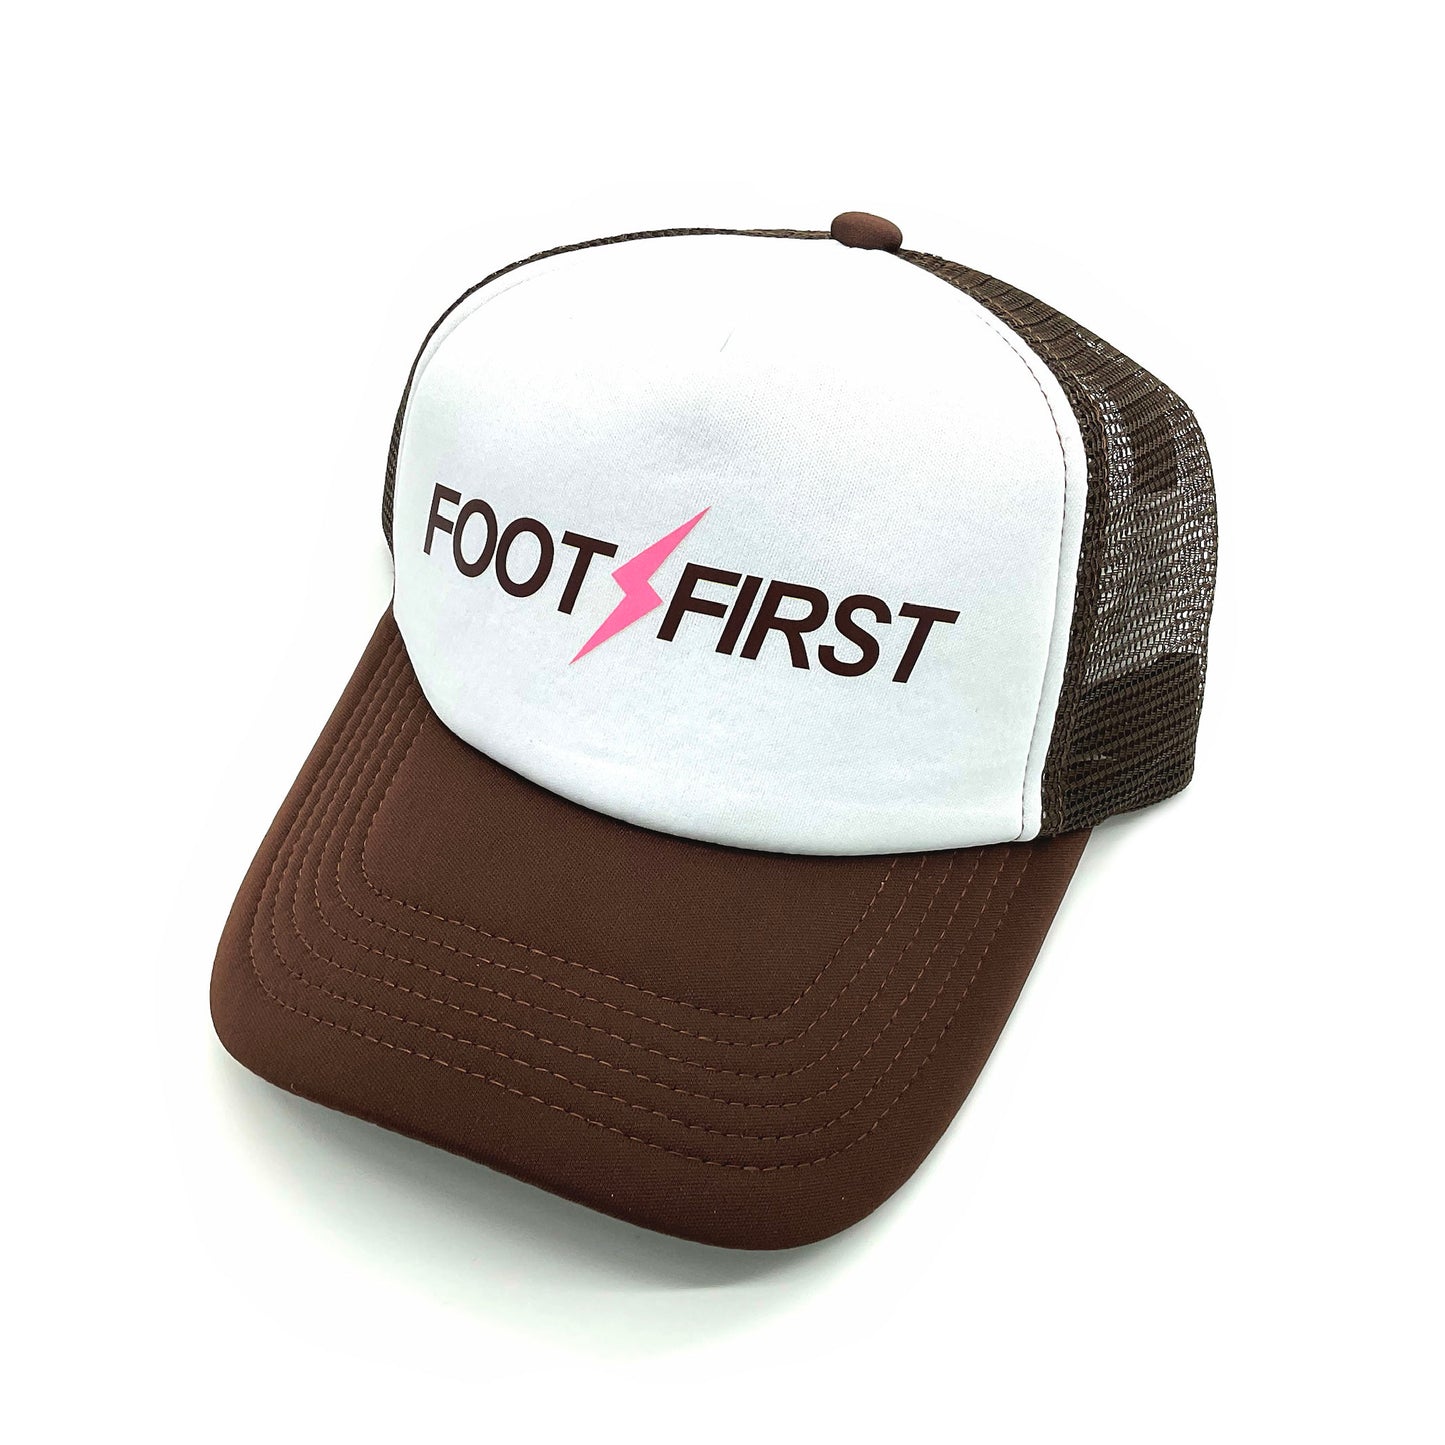 FOOT FIRST CLASSIC LOGO LIGHTNING DIFFERENT MESH CAP